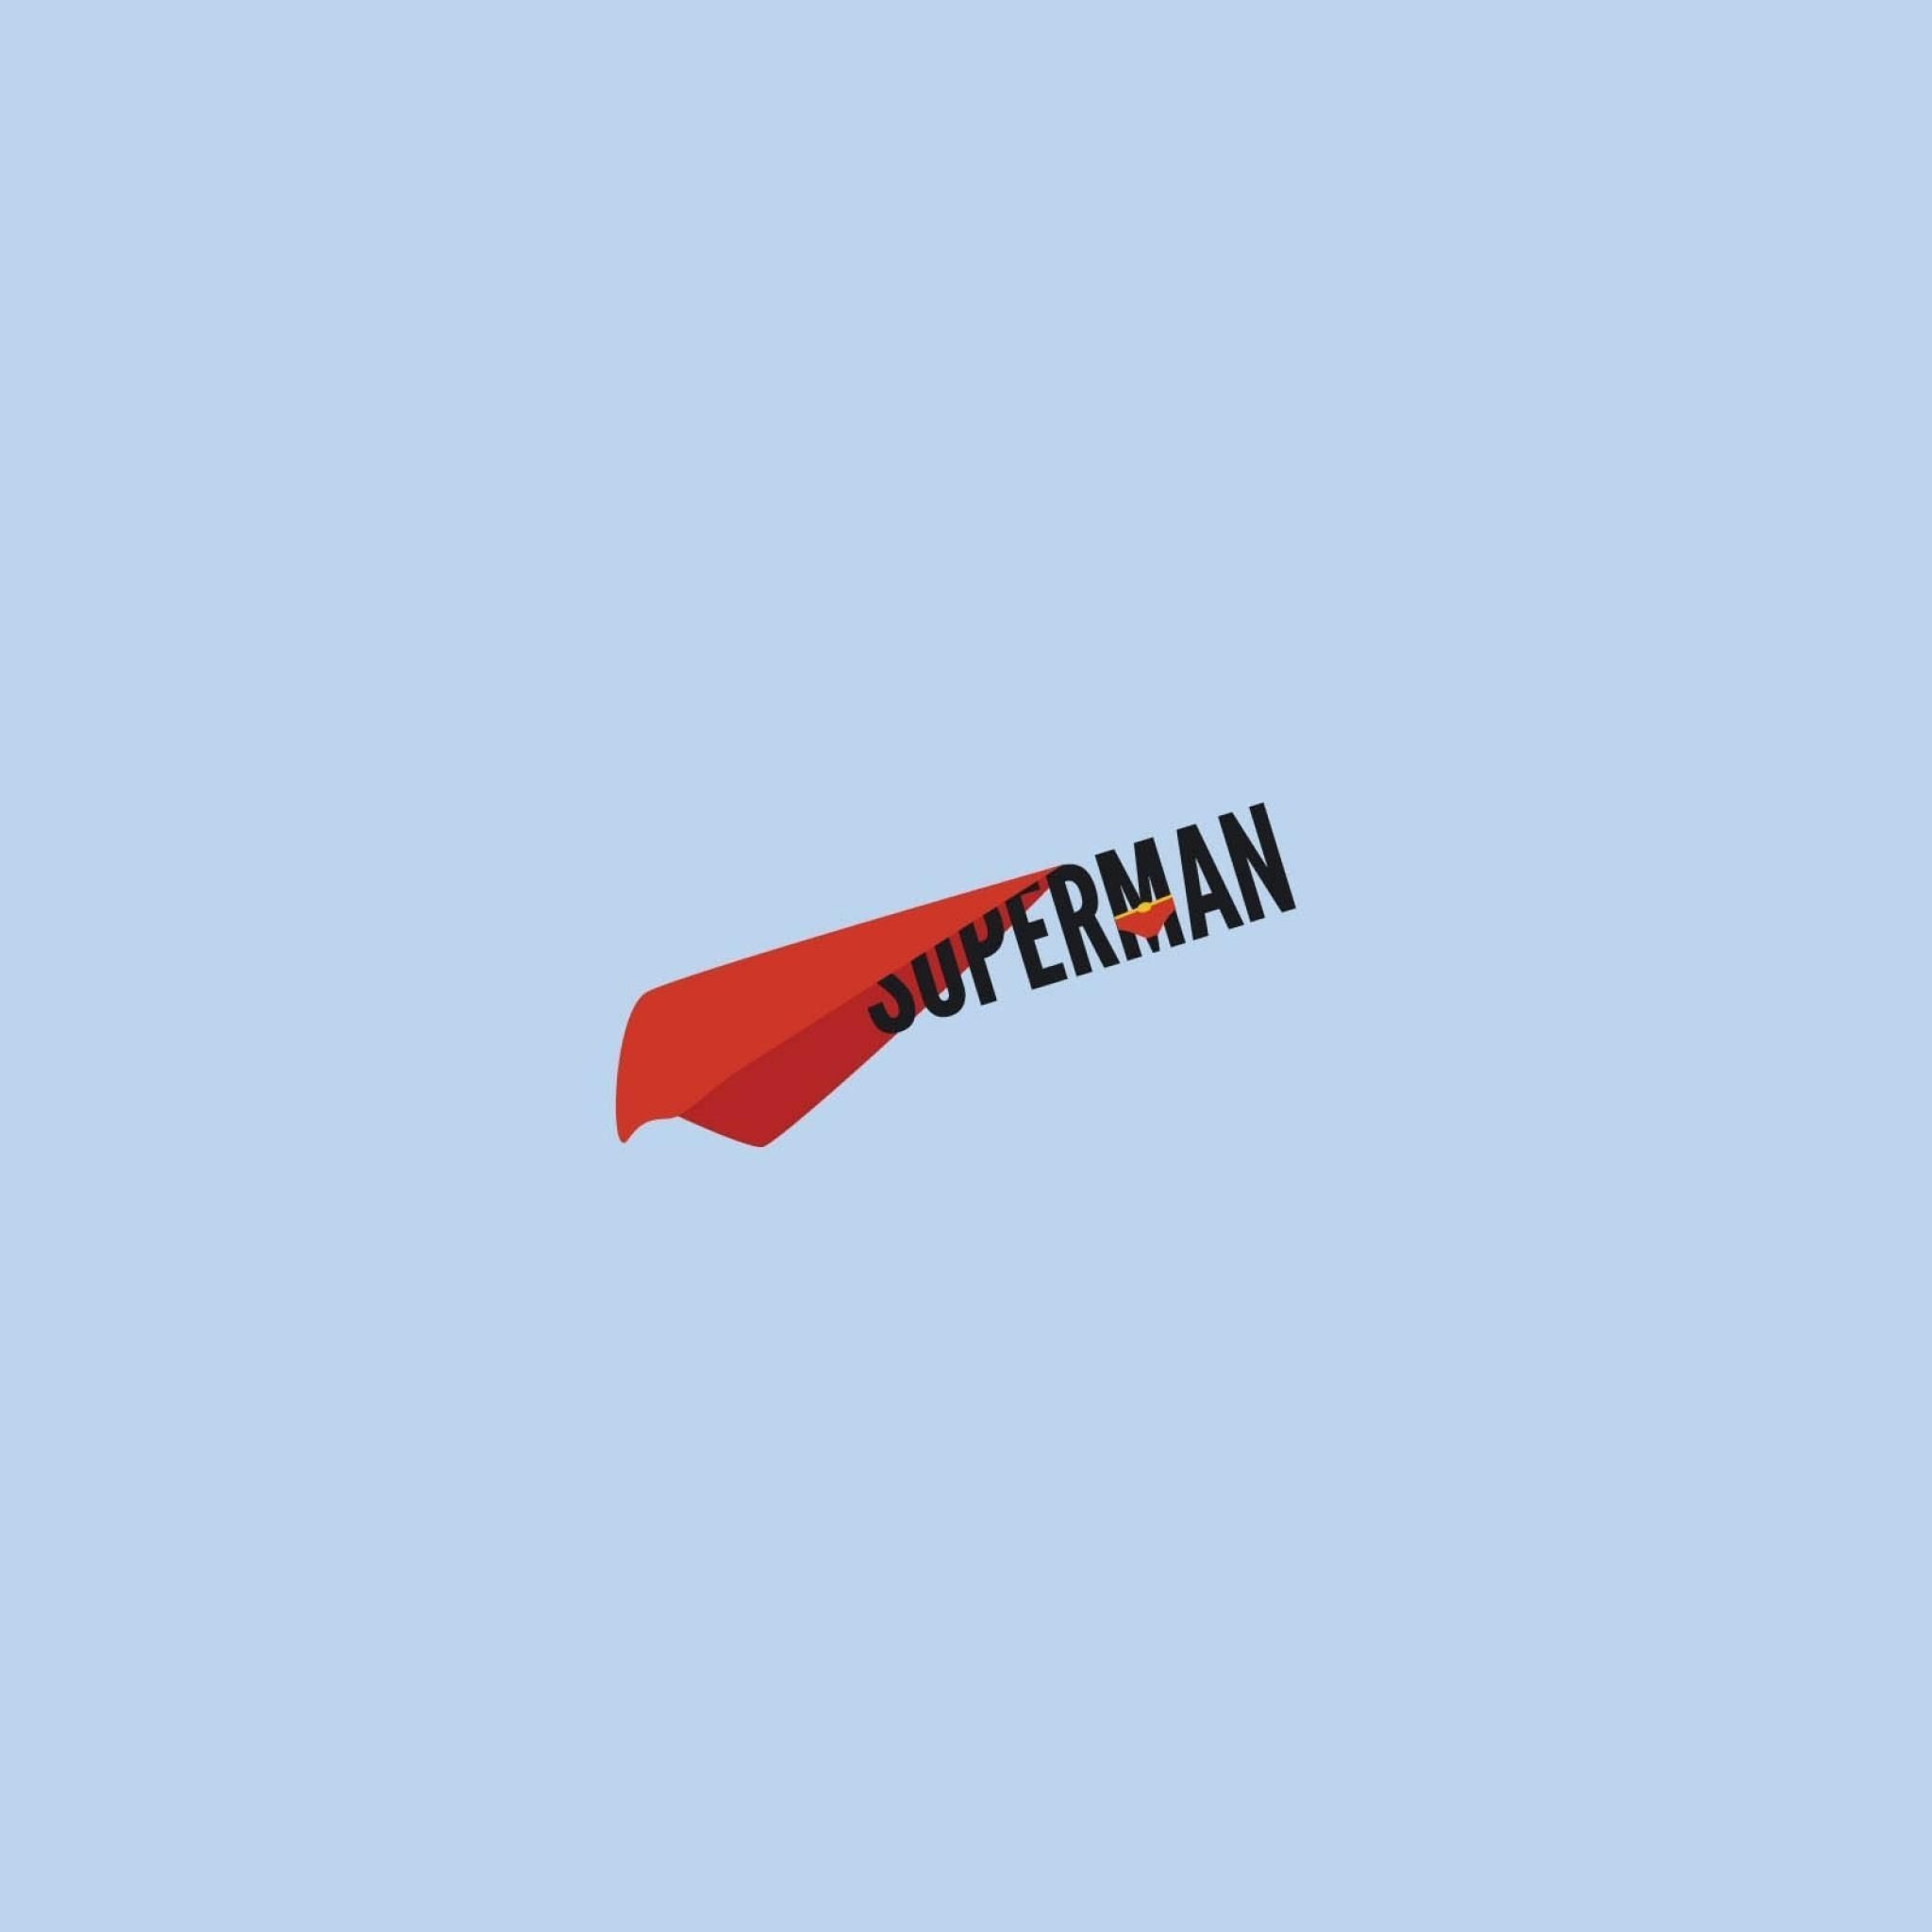 Superman Minimal iPad Wallpaper HD #iPad #wallpaper. iPad, iPhone